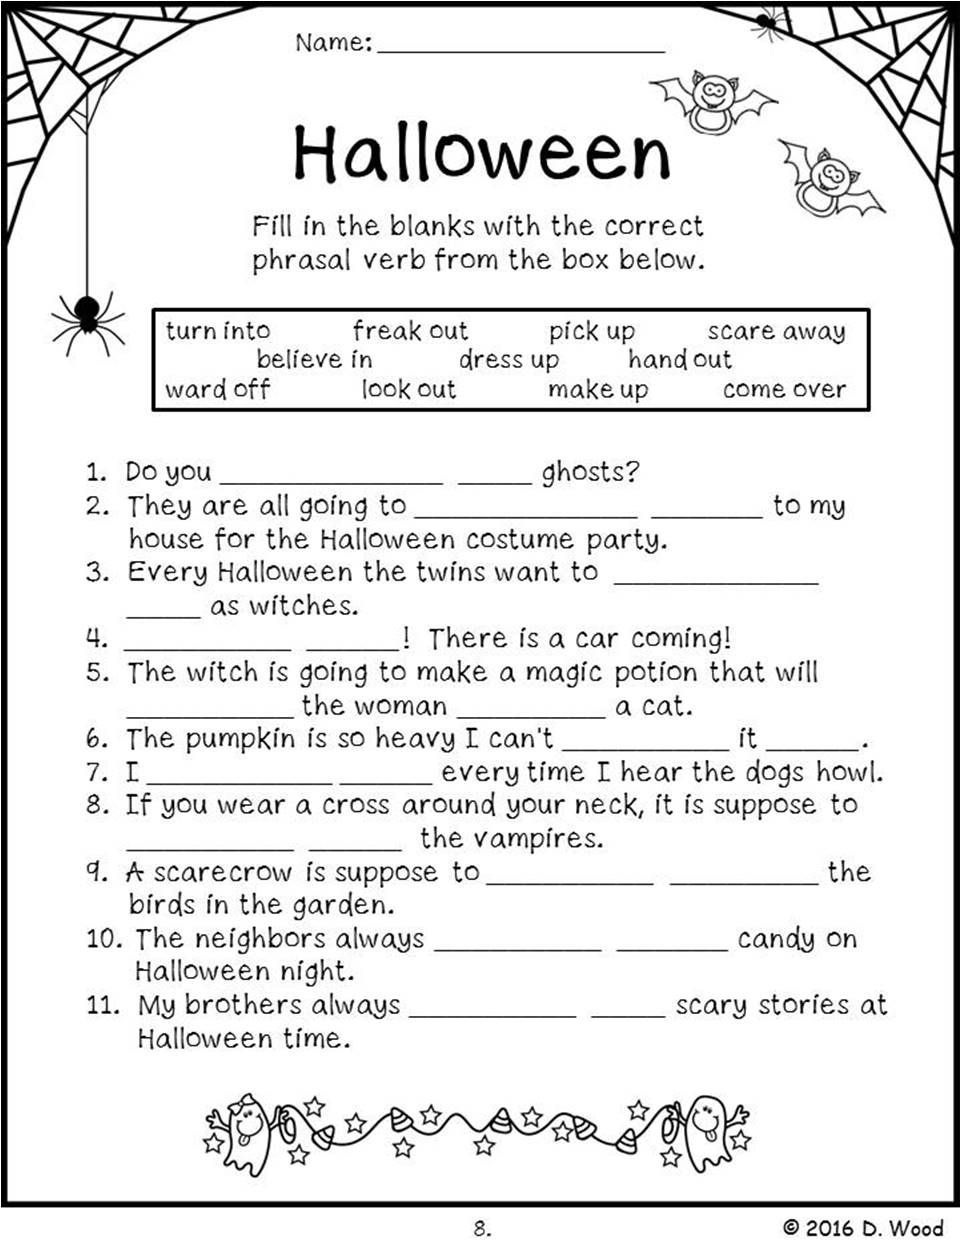 Halloween Reading Comprehension Worksheets 5th Grade 